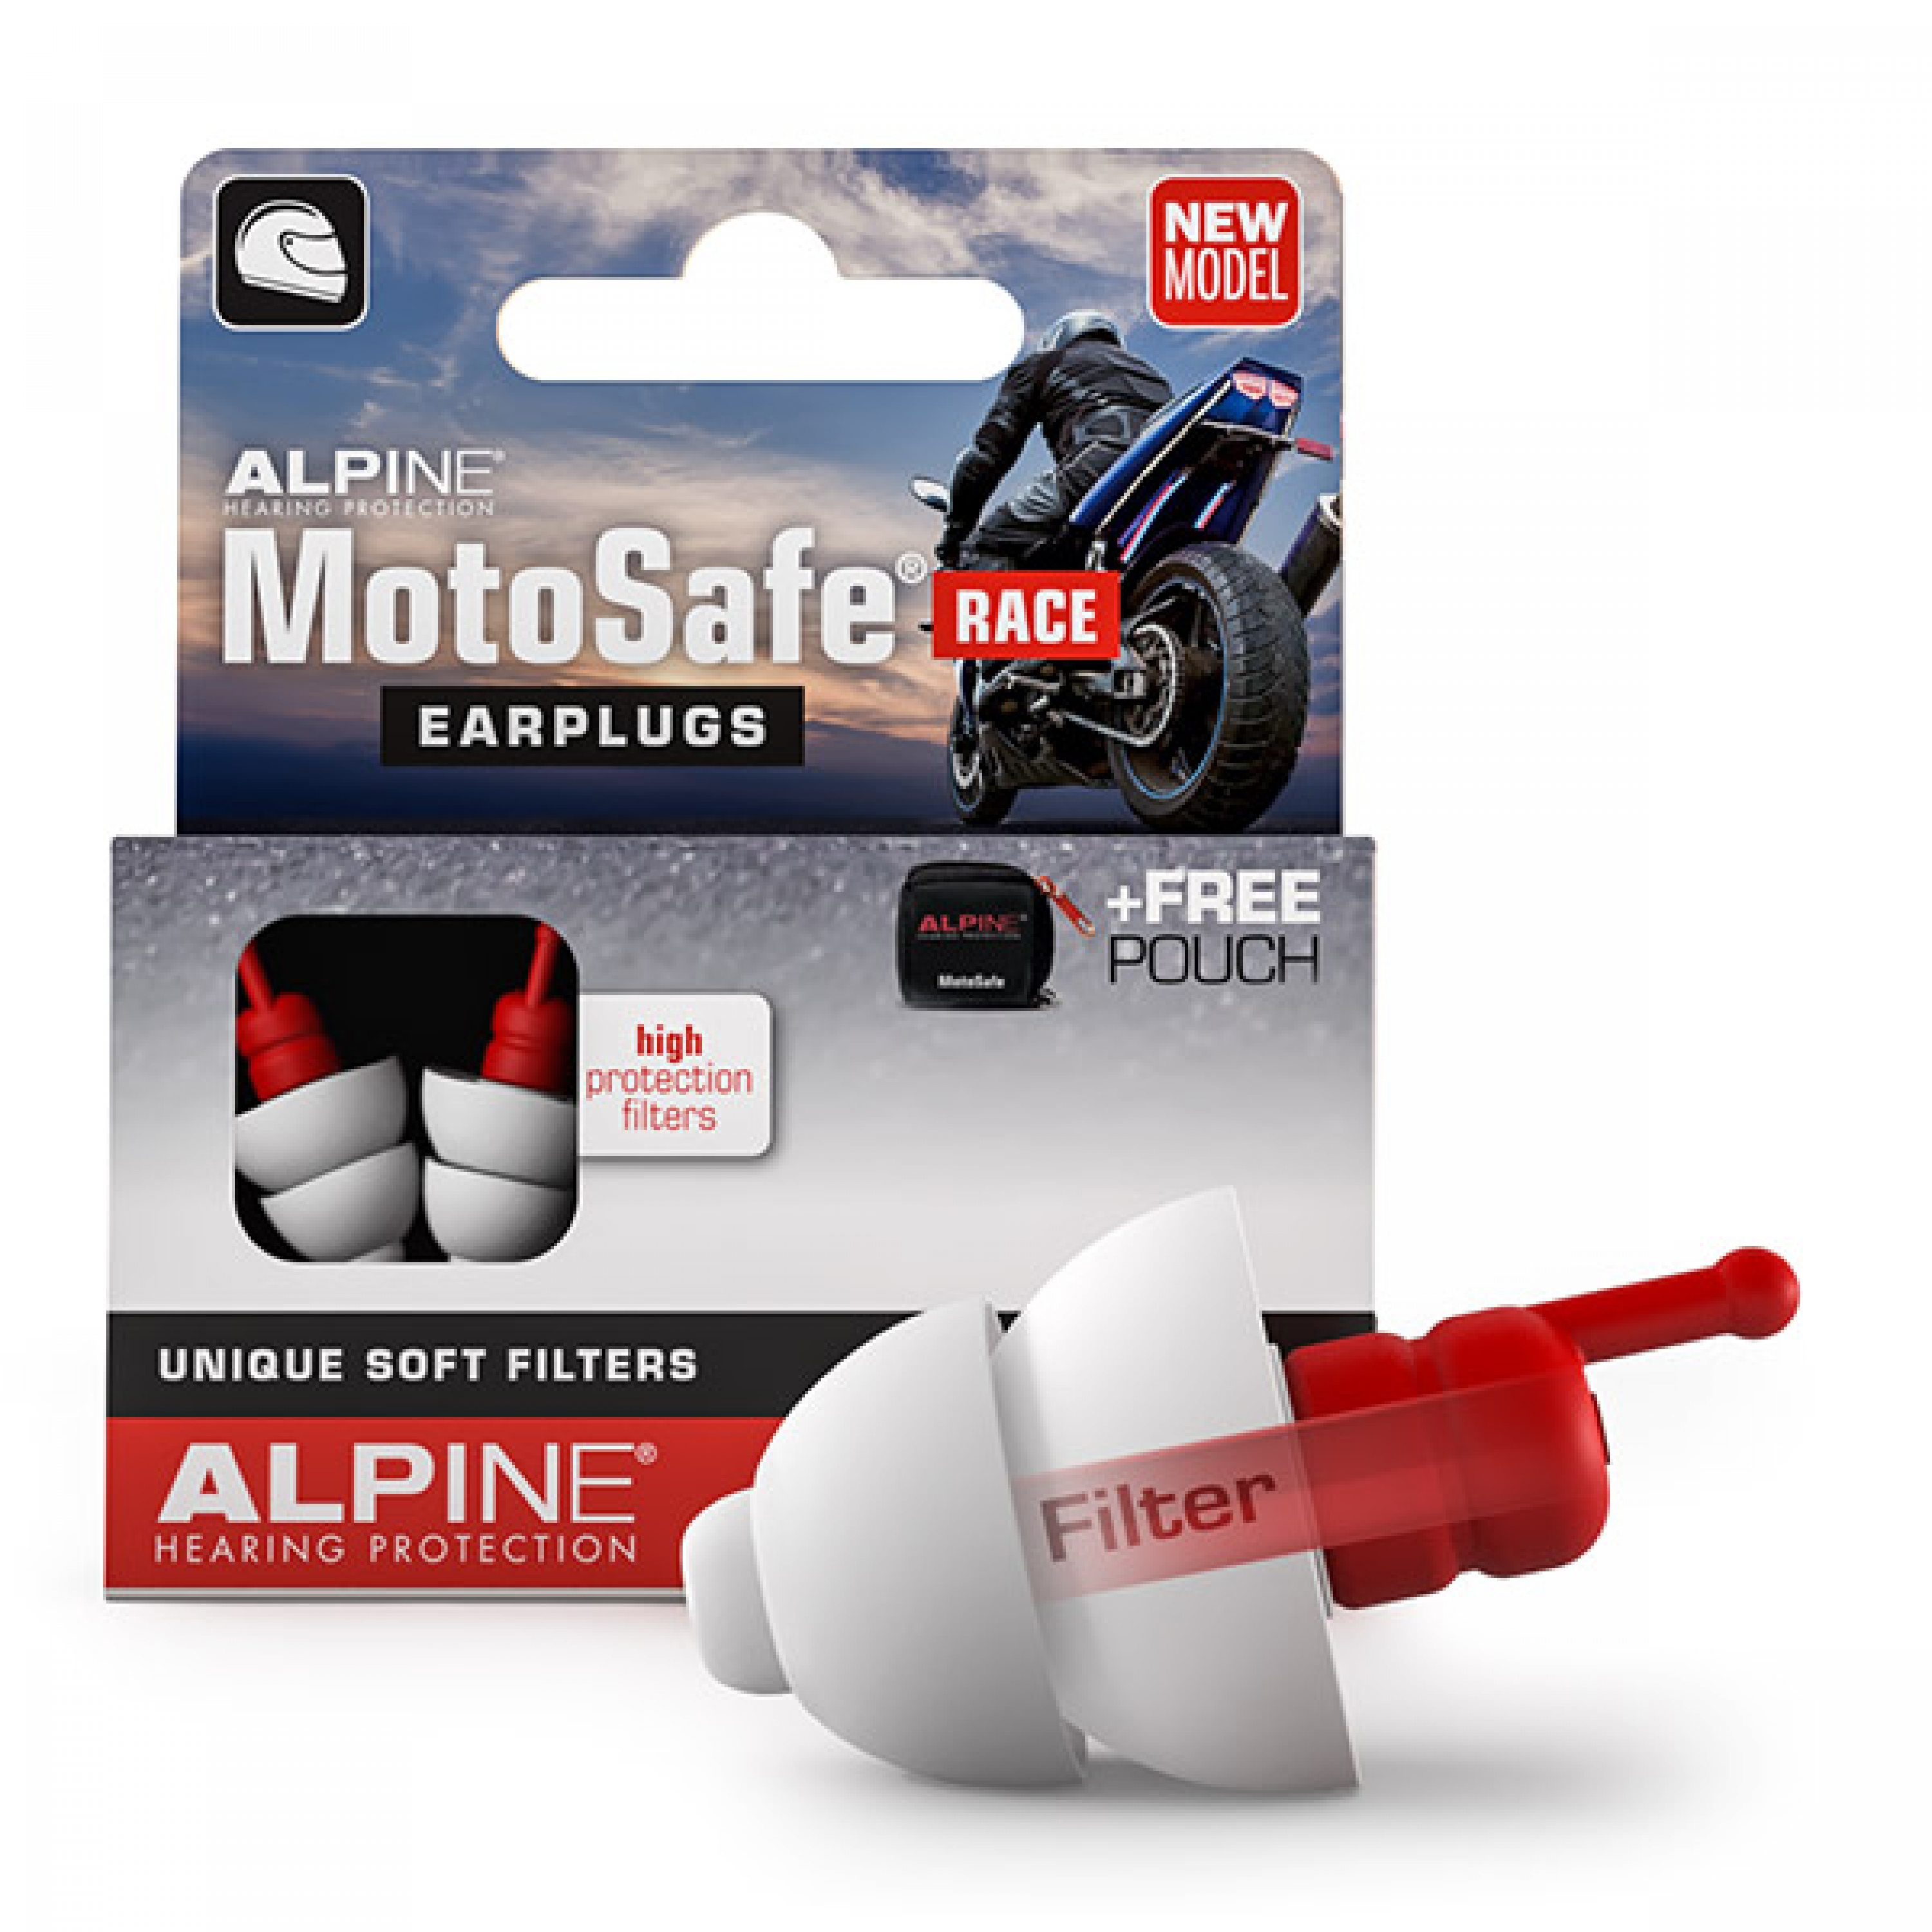 Alpine "MotoSafe Race" Gehörschutz